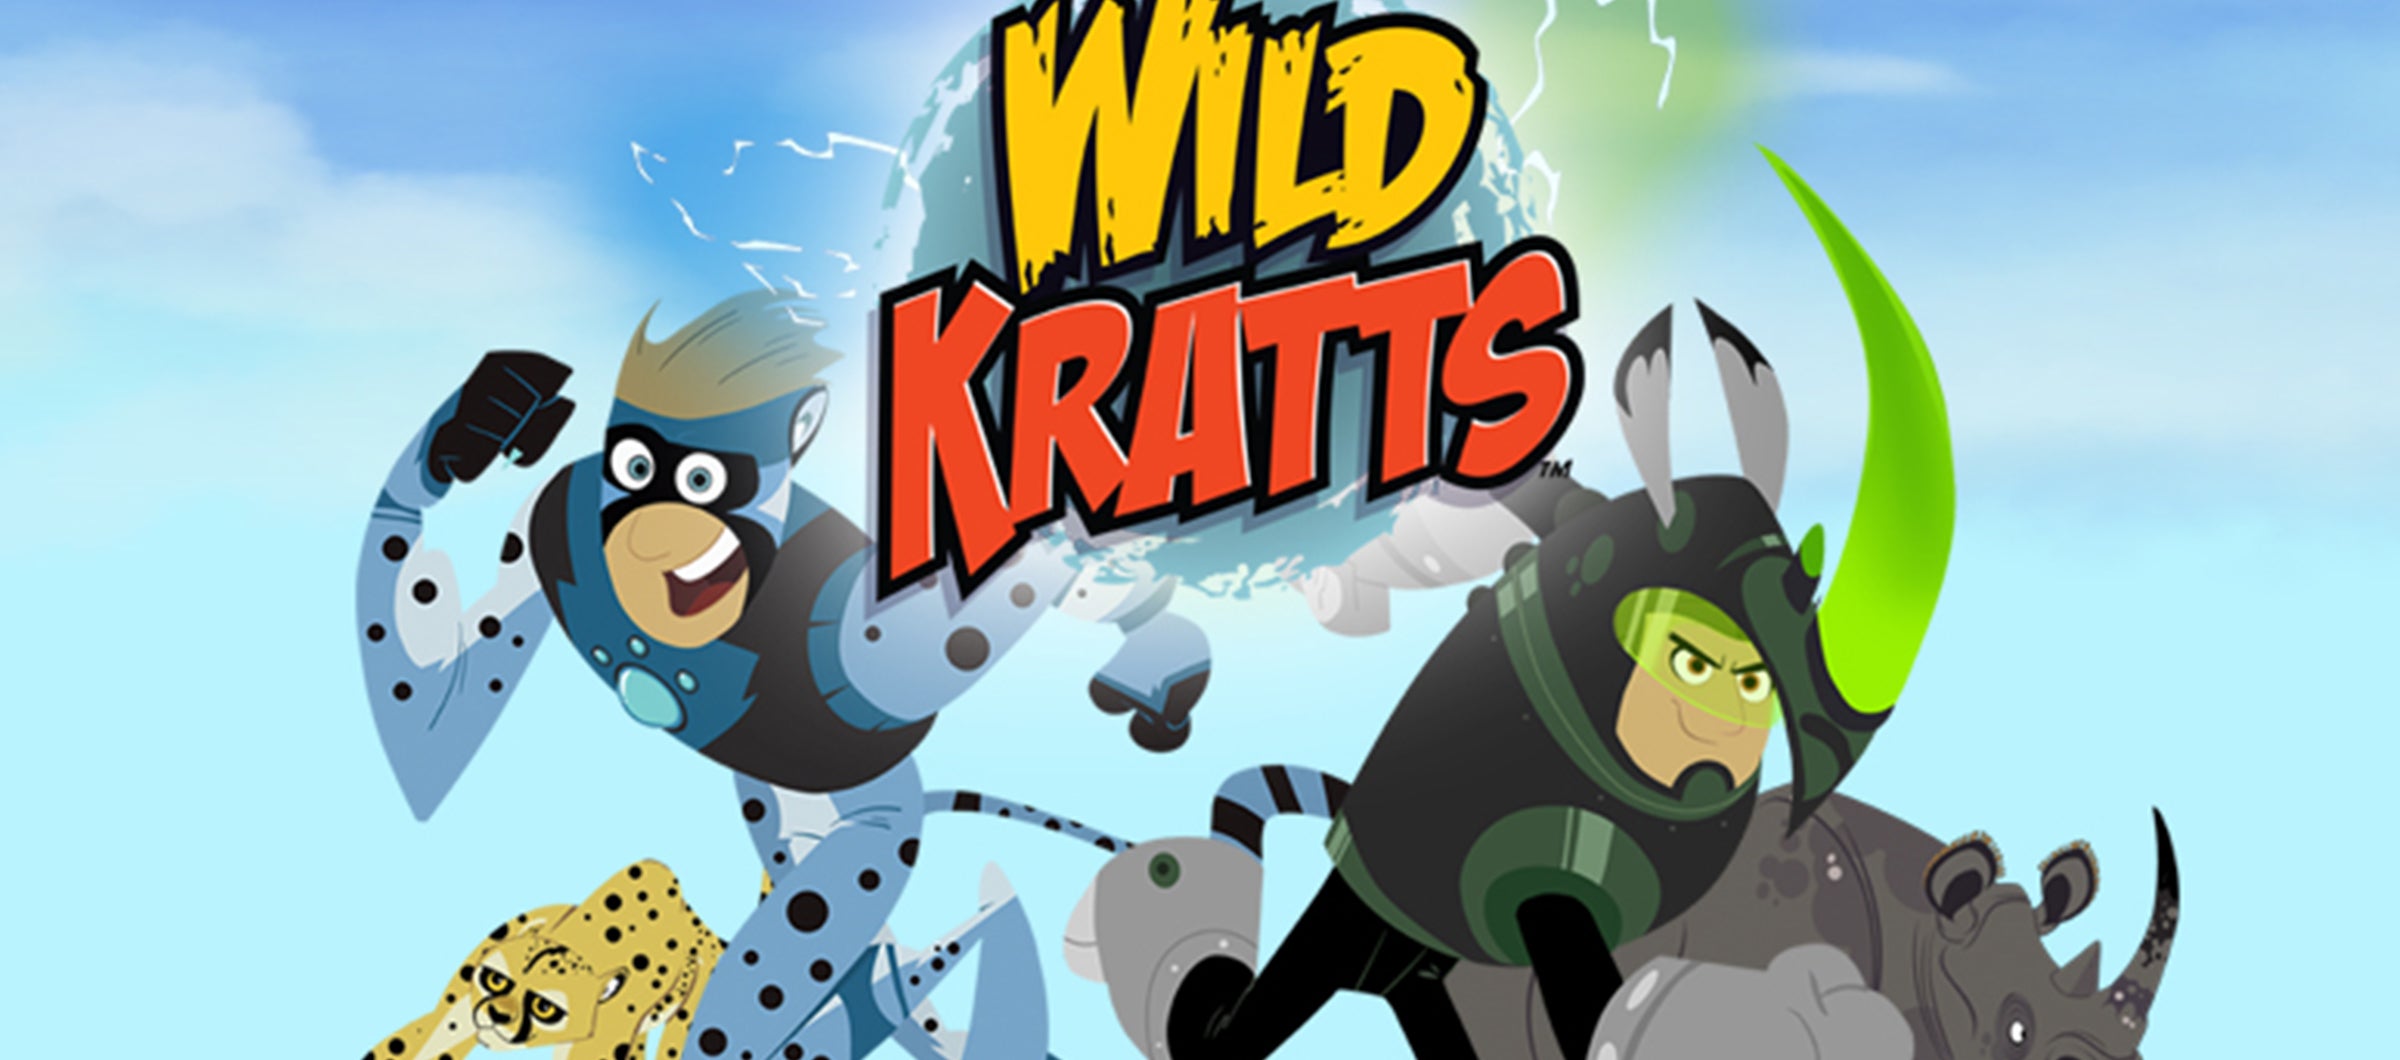 Wild Kratts, Kratt Brothers, Animals, Wild animals, pbs, kid vision.